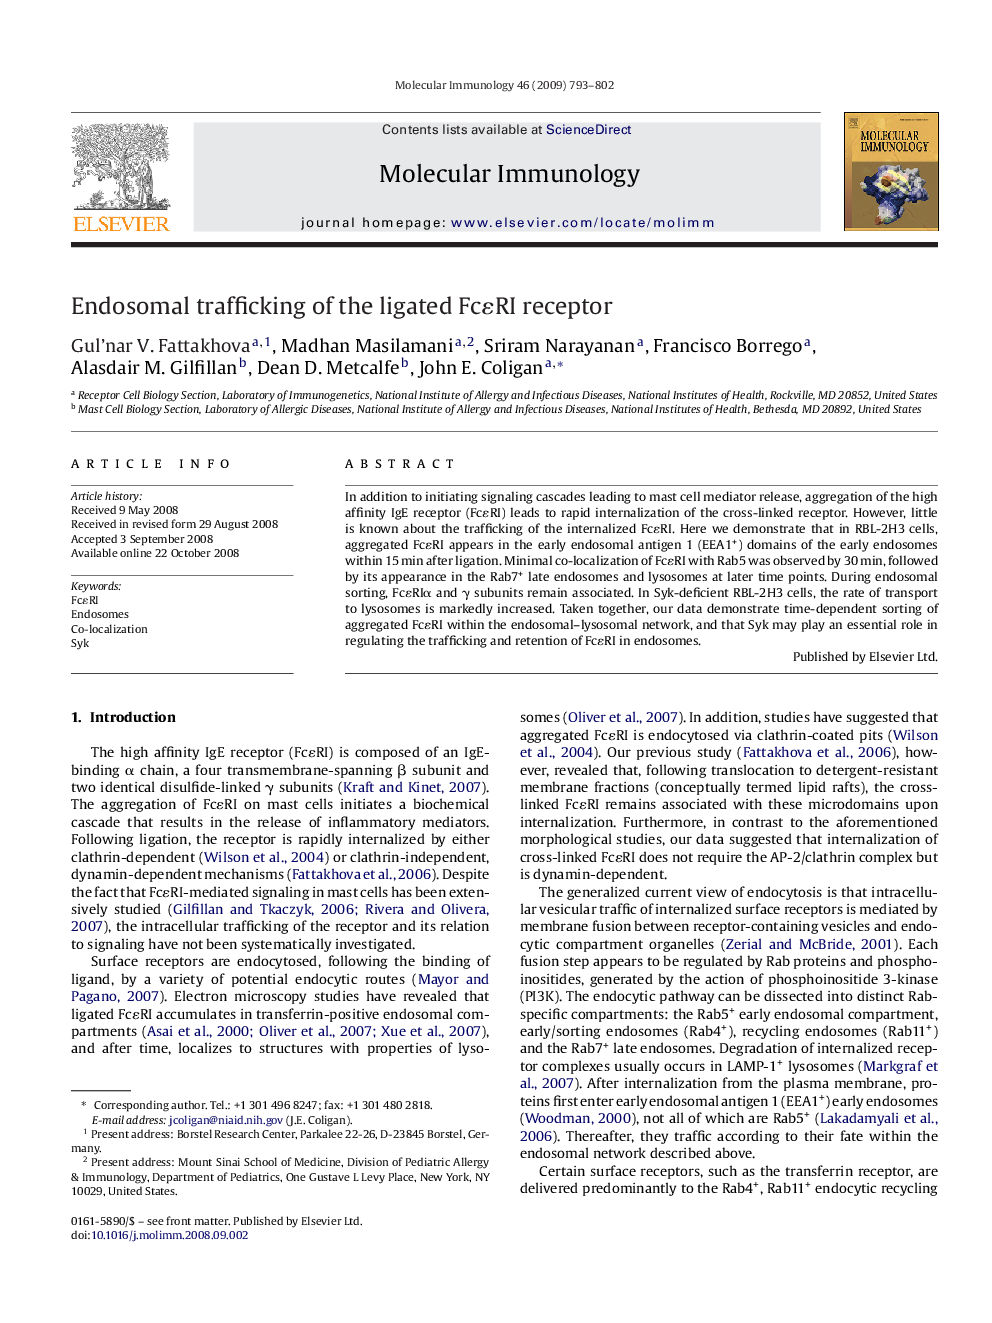 Endosomal trafficking of the ligated FcɛRI receptor